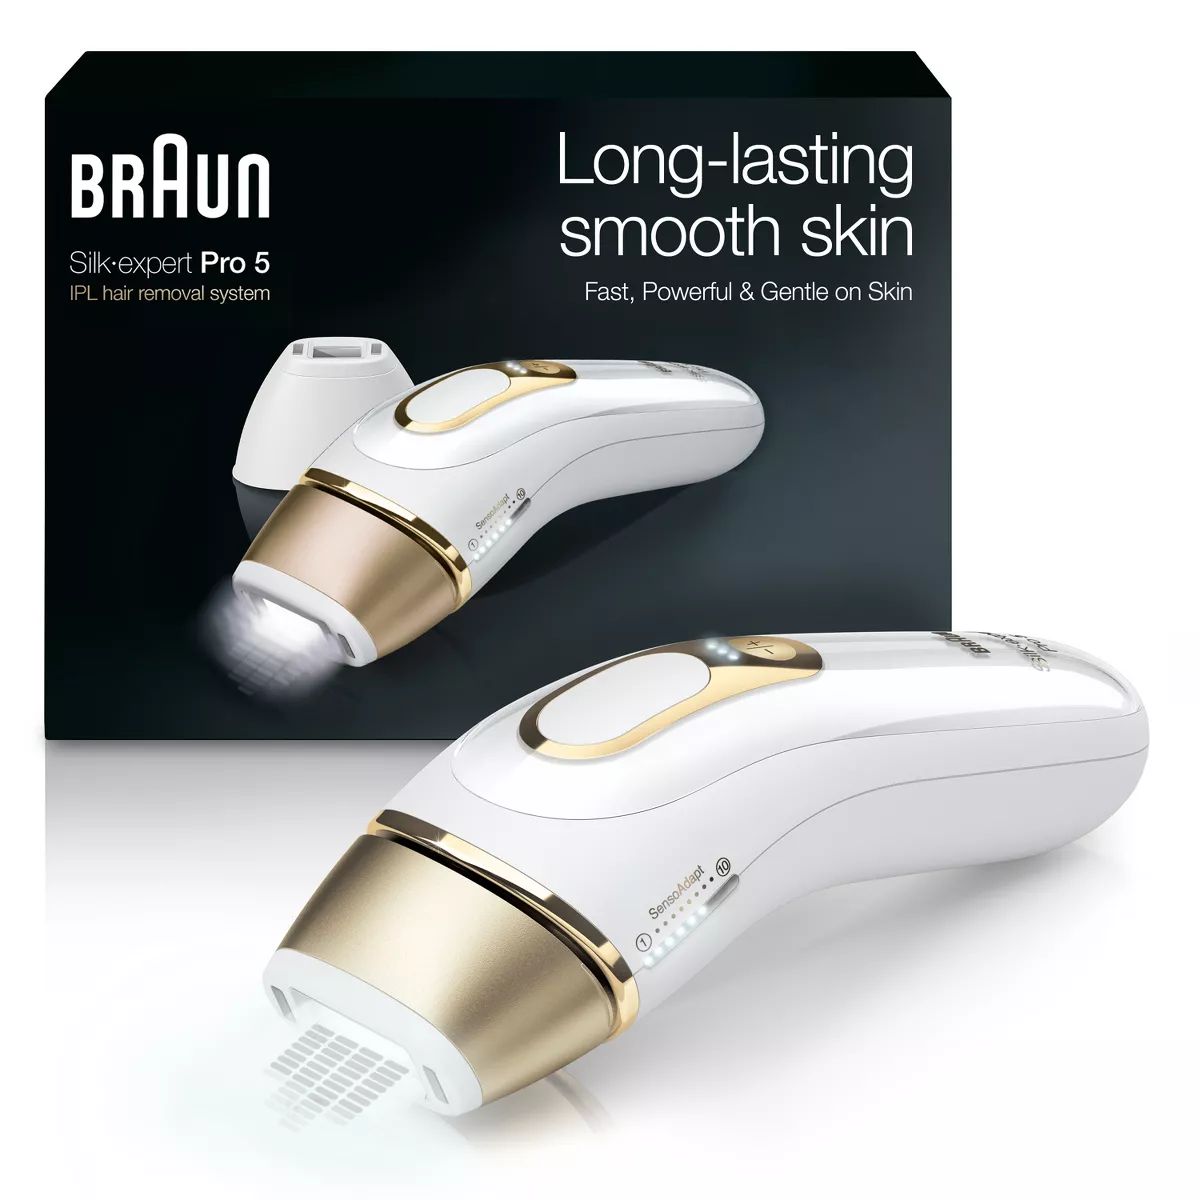 Braun Silk-expert Pro 5 PL5147 IPL Permanent Hair Removal System | Target